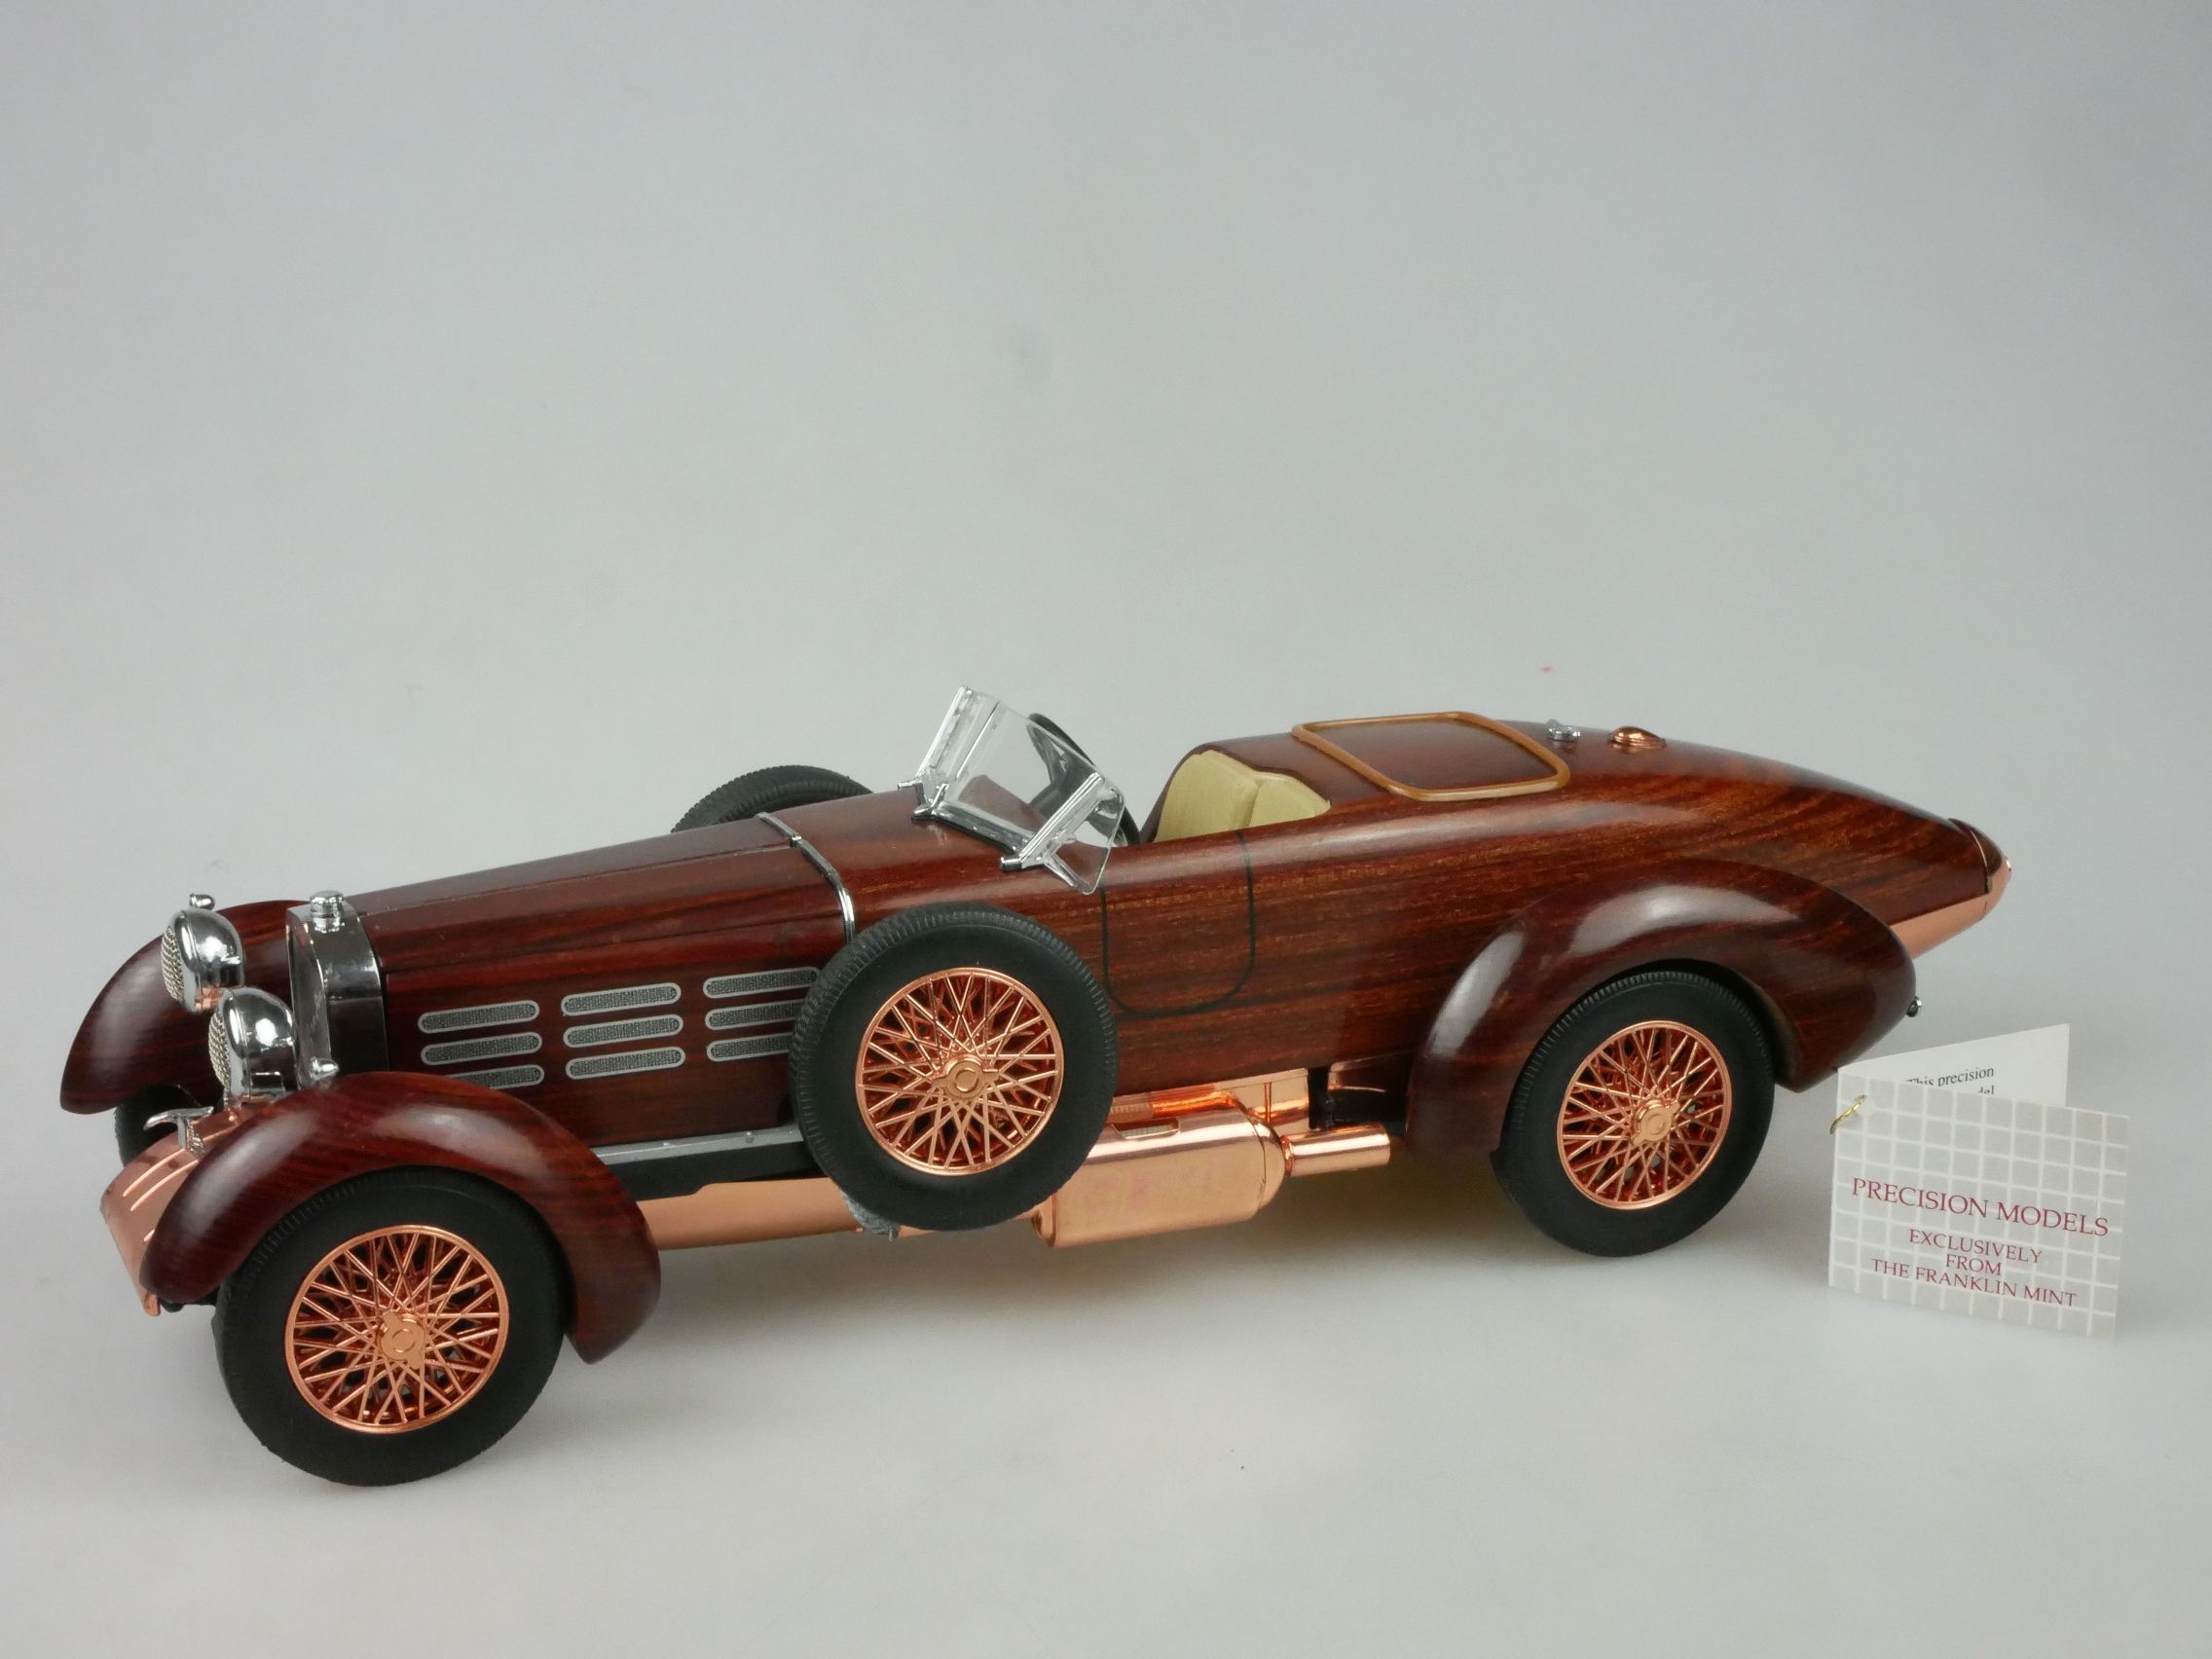 Franklin Mint 1/24 the 1924 Hispano Suiza Tulipwood - precision model  126763